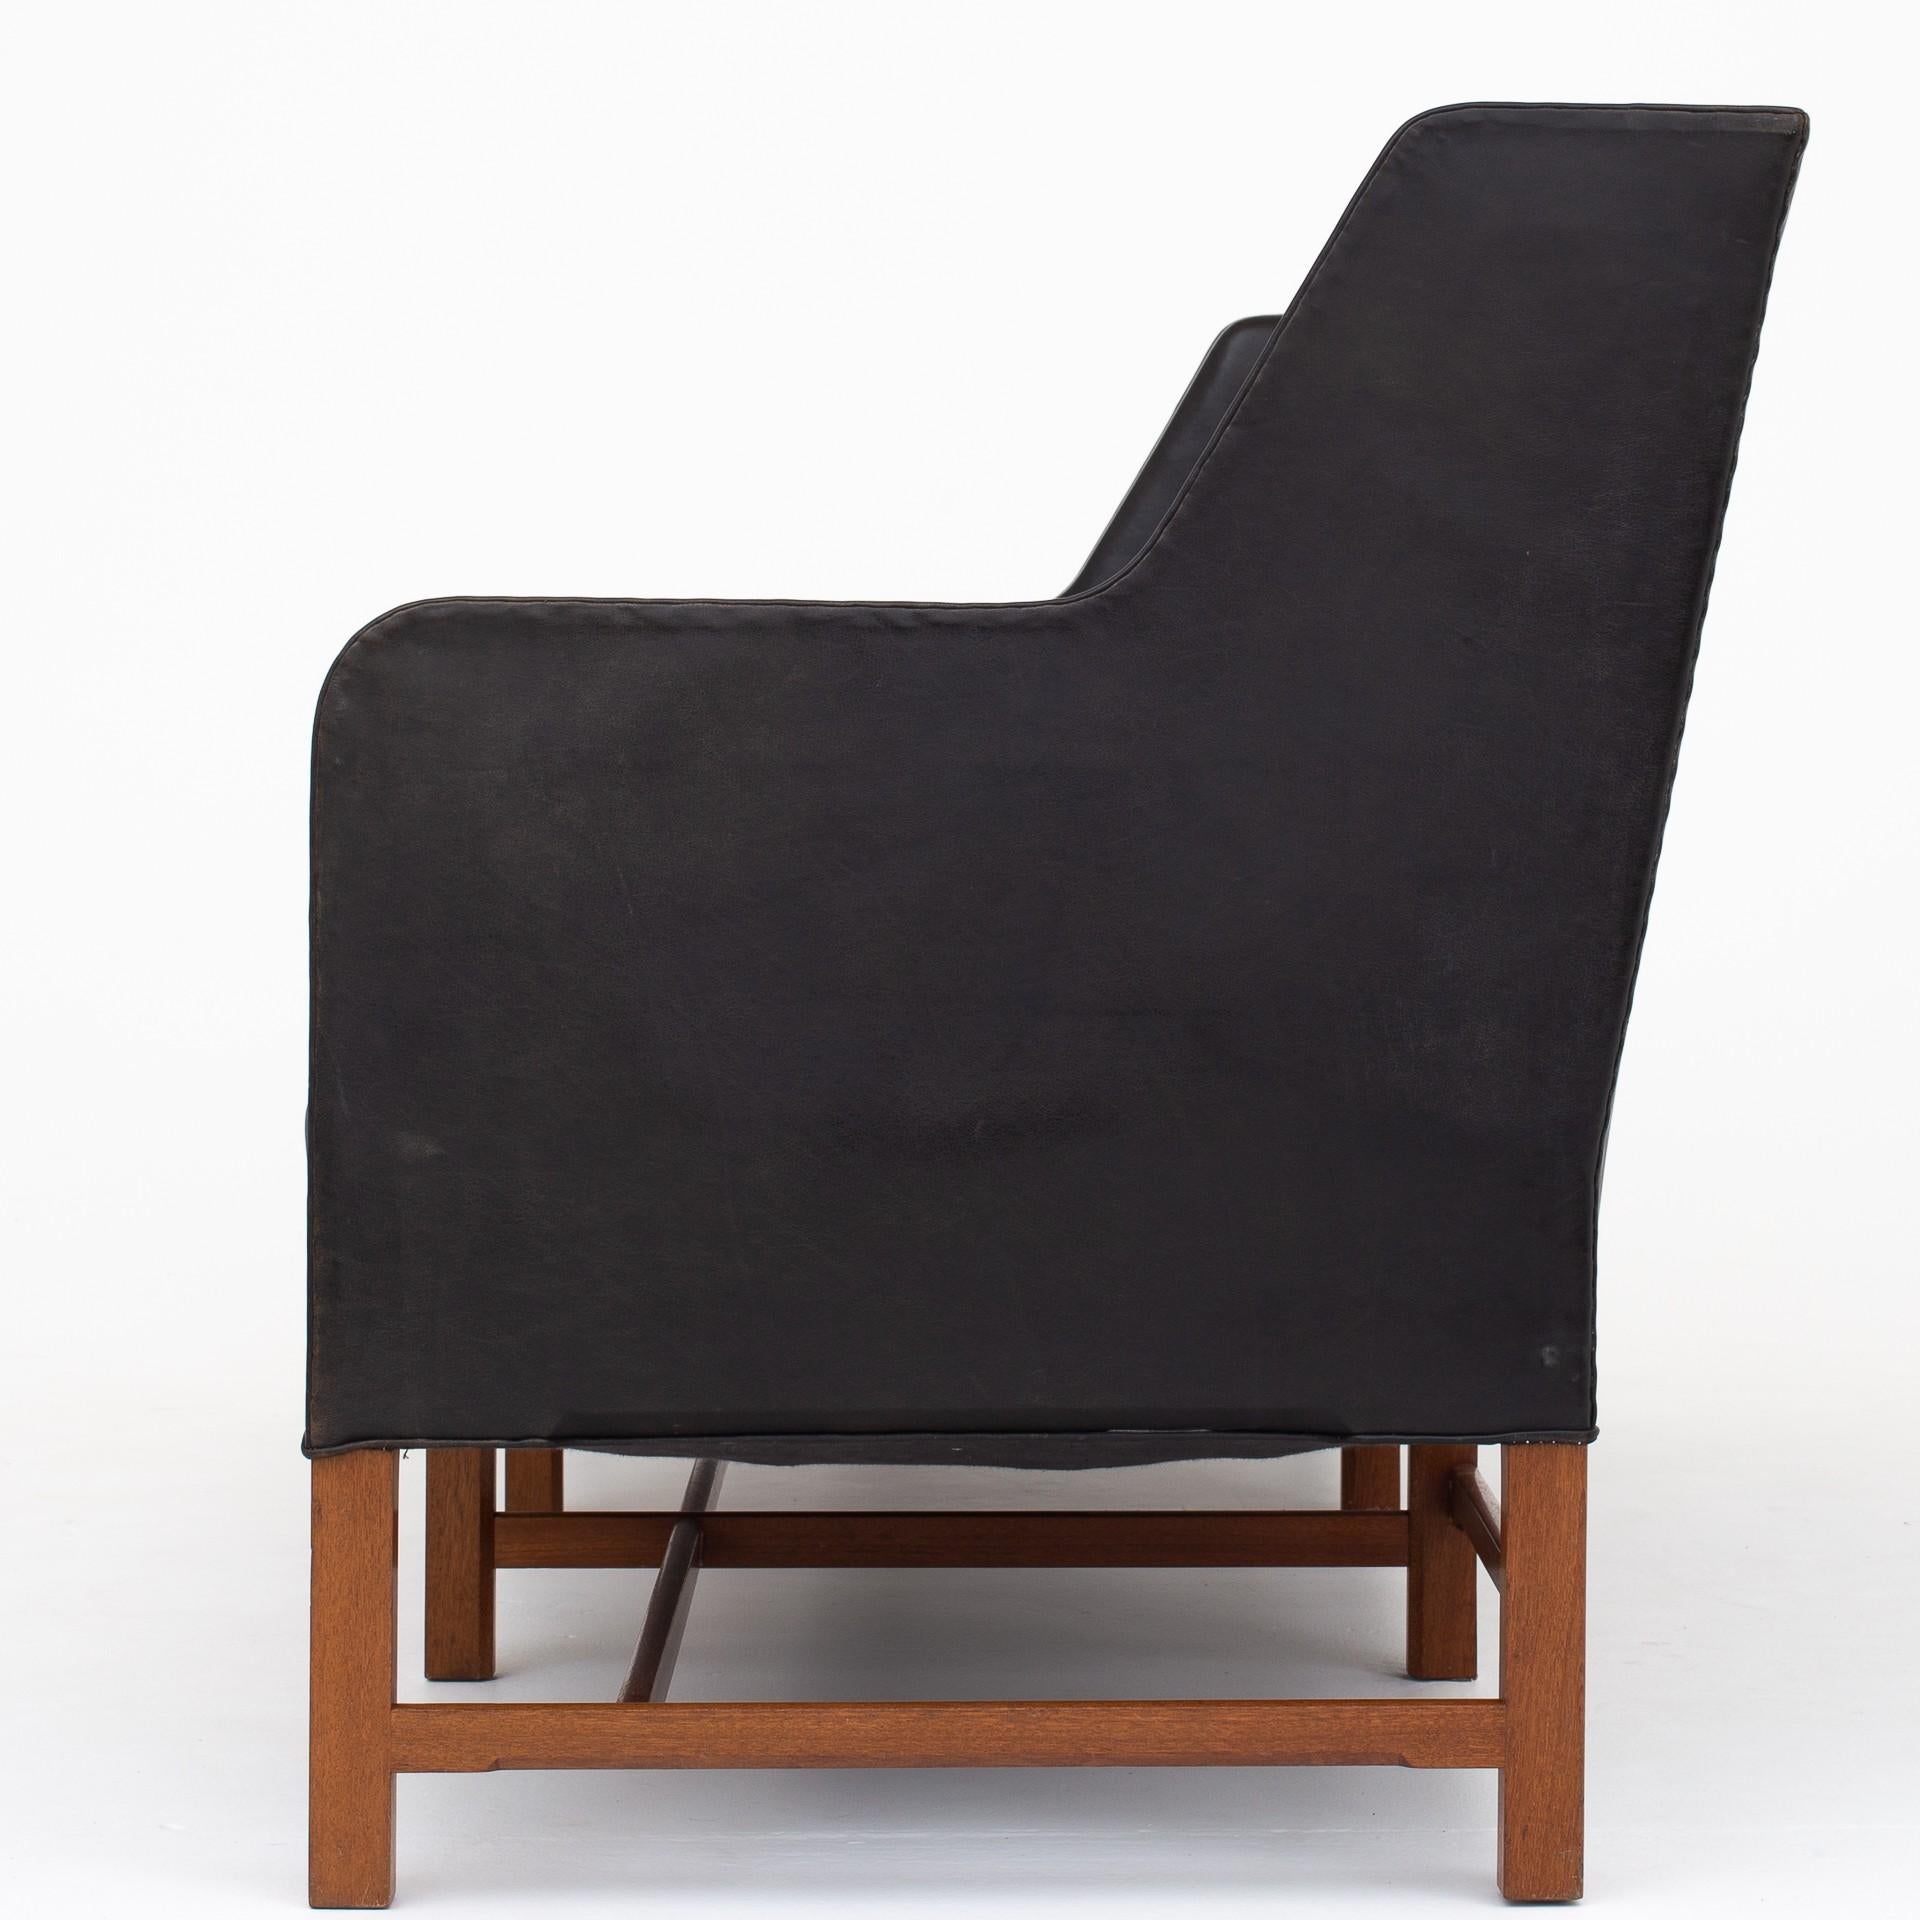 3-seat sofa model 5011 in black leather and mahogany base. Maker Rud Rasmussen.